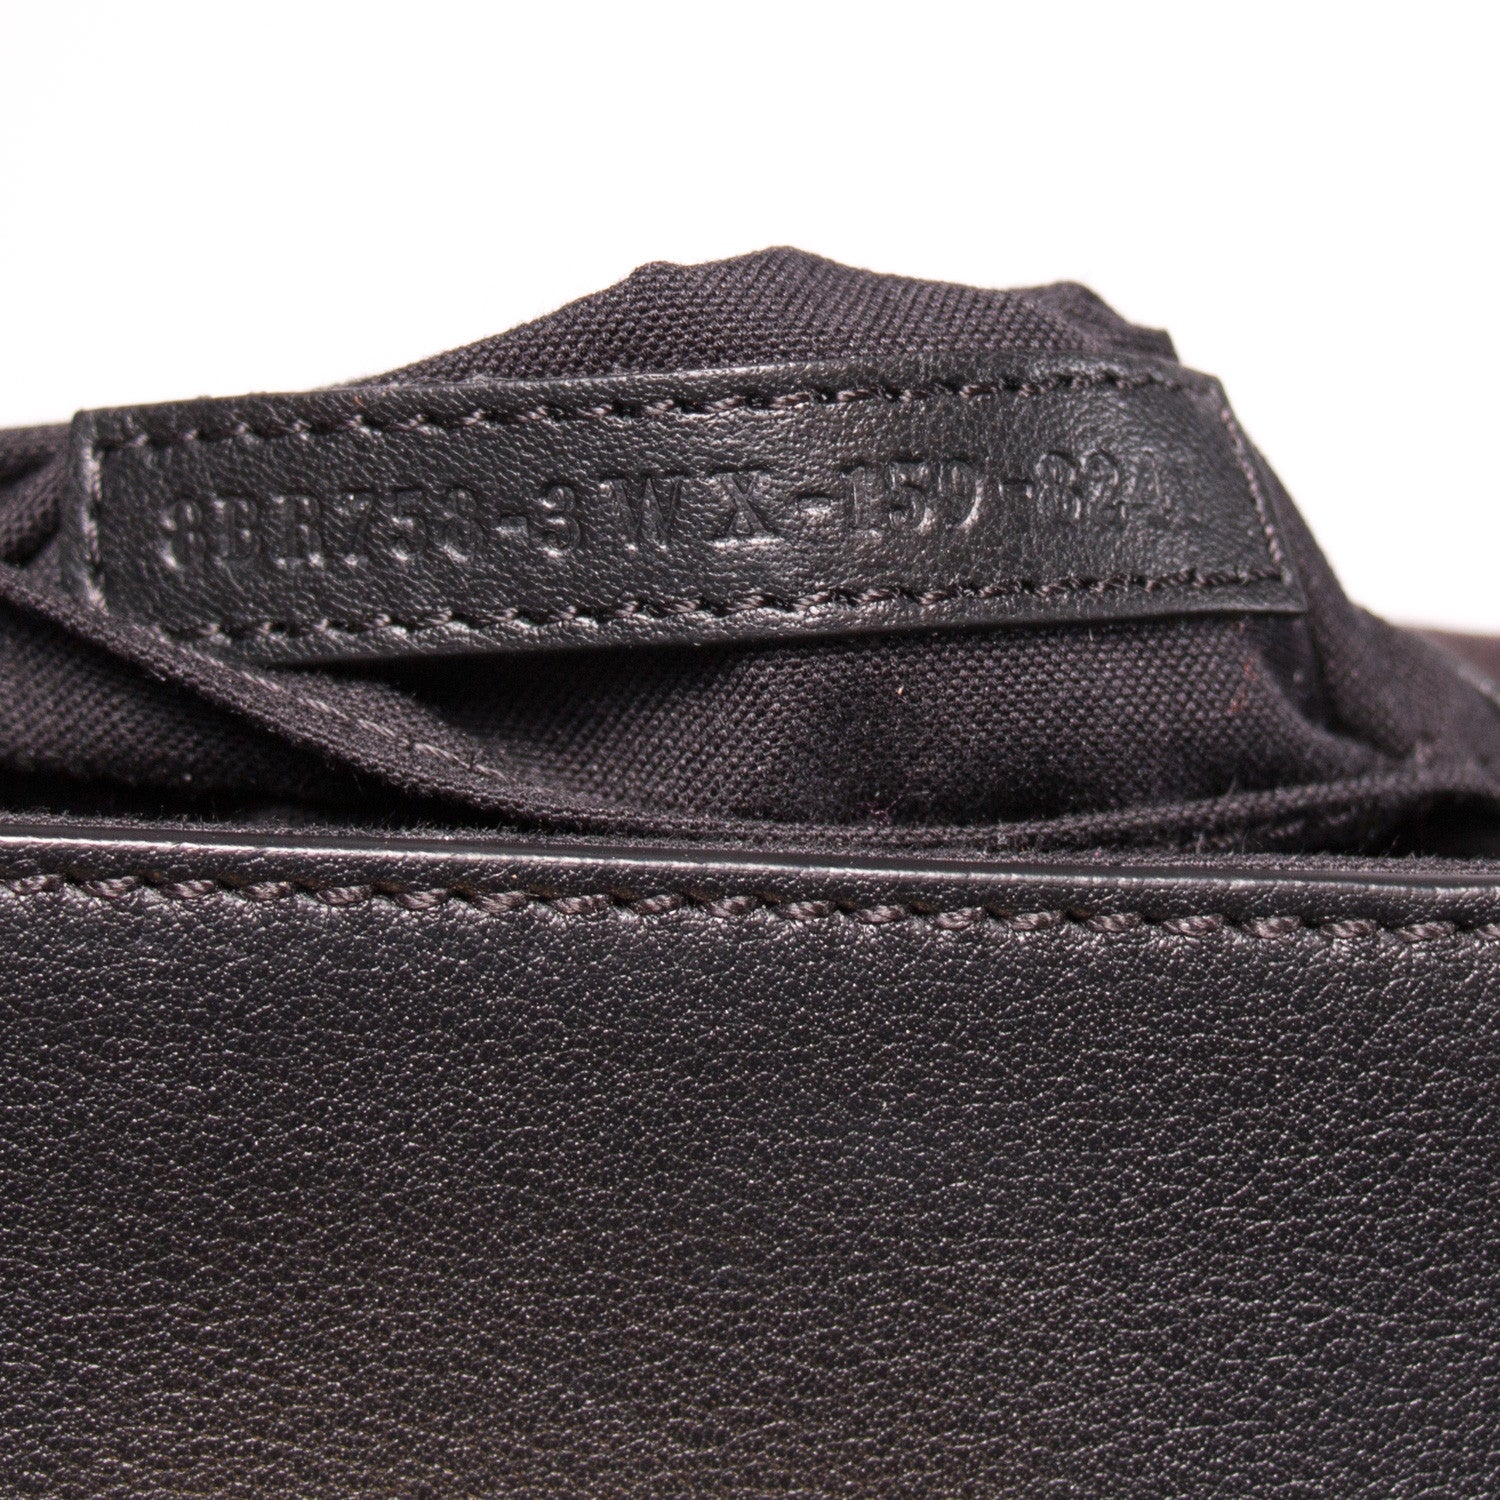 Shop authentic Fendi Mini 3Baguette Shoulder Bag at revogue for just ...